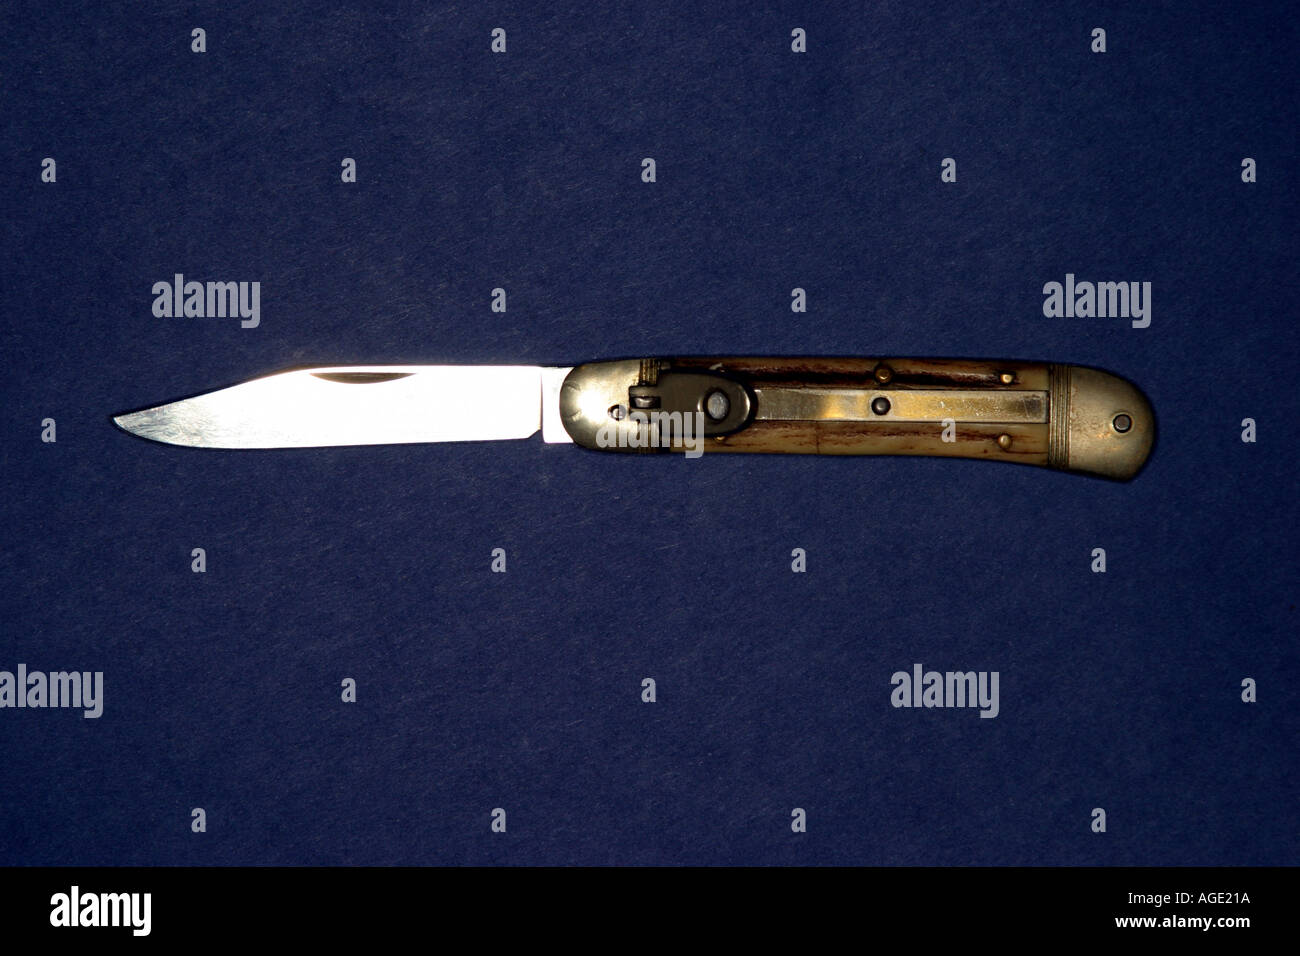 Flicknife flick knife crime Stock Photo